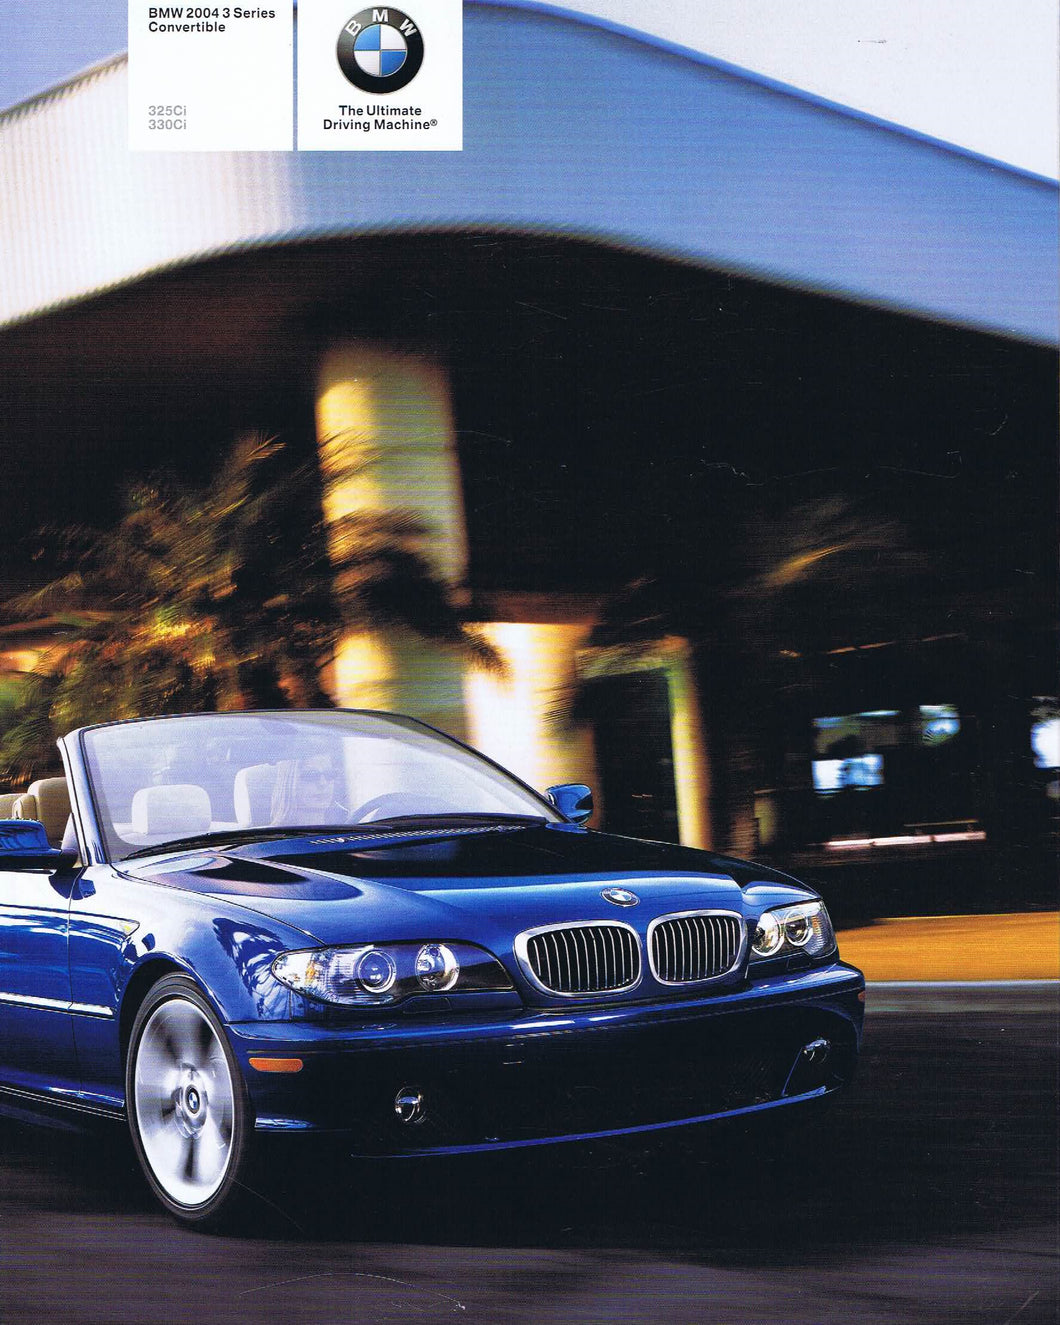 Brochure - BMW 2004 3 Series Convertible 325Ci 330Ci - E46 Brochure (1st version)